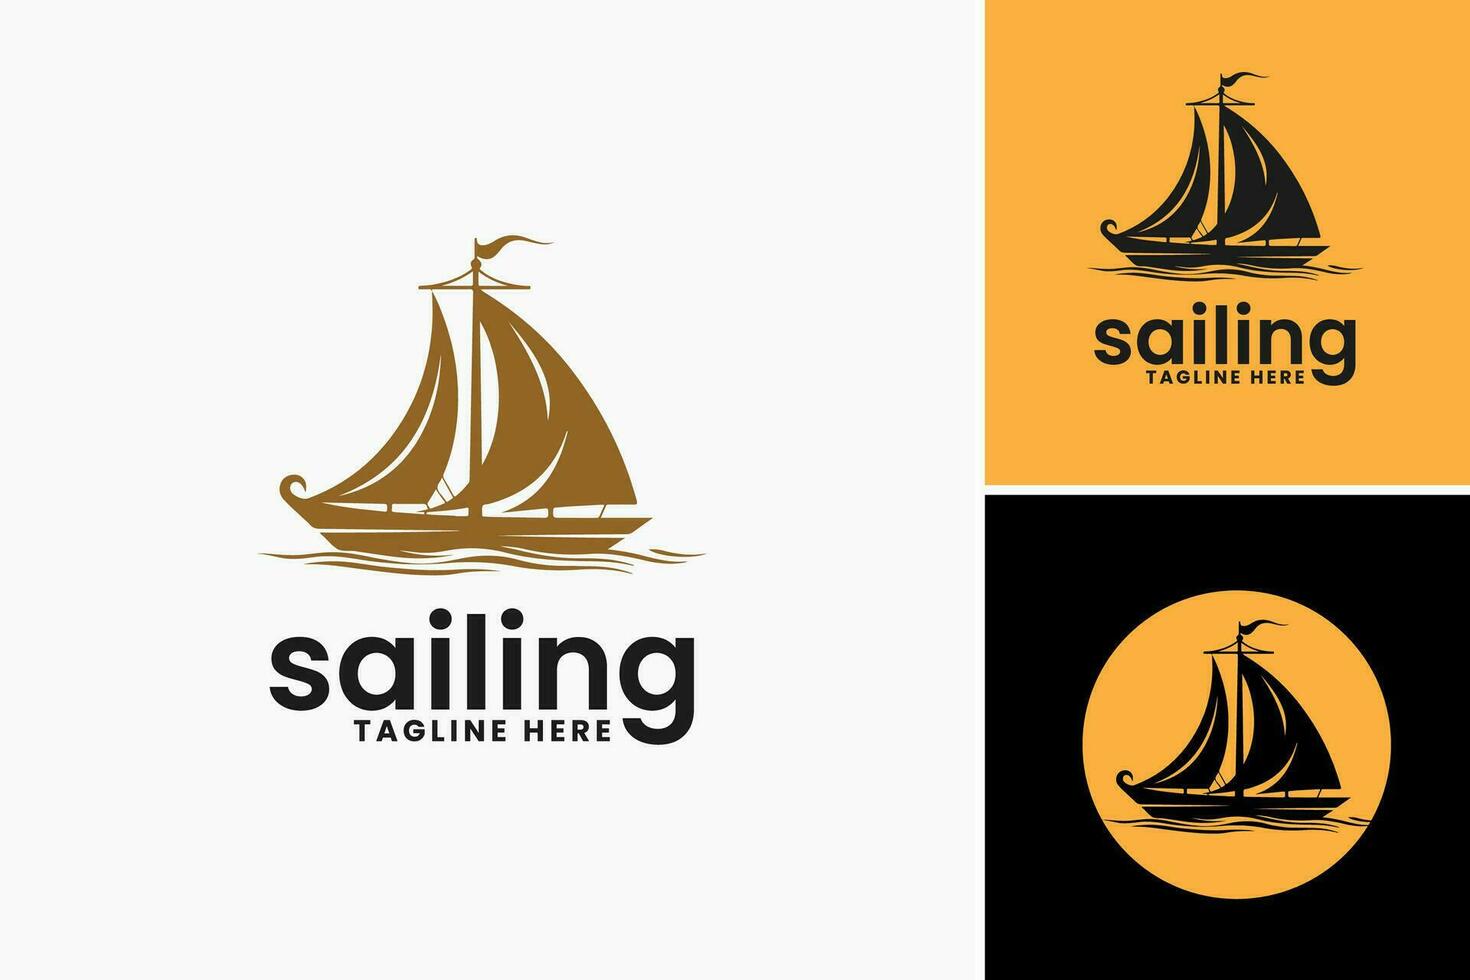 navegación logo modelo es un diseño activo adecuado para creando logos relacionado a navegación, paseo en barco, o de temática marina negocios y organizaciones vector